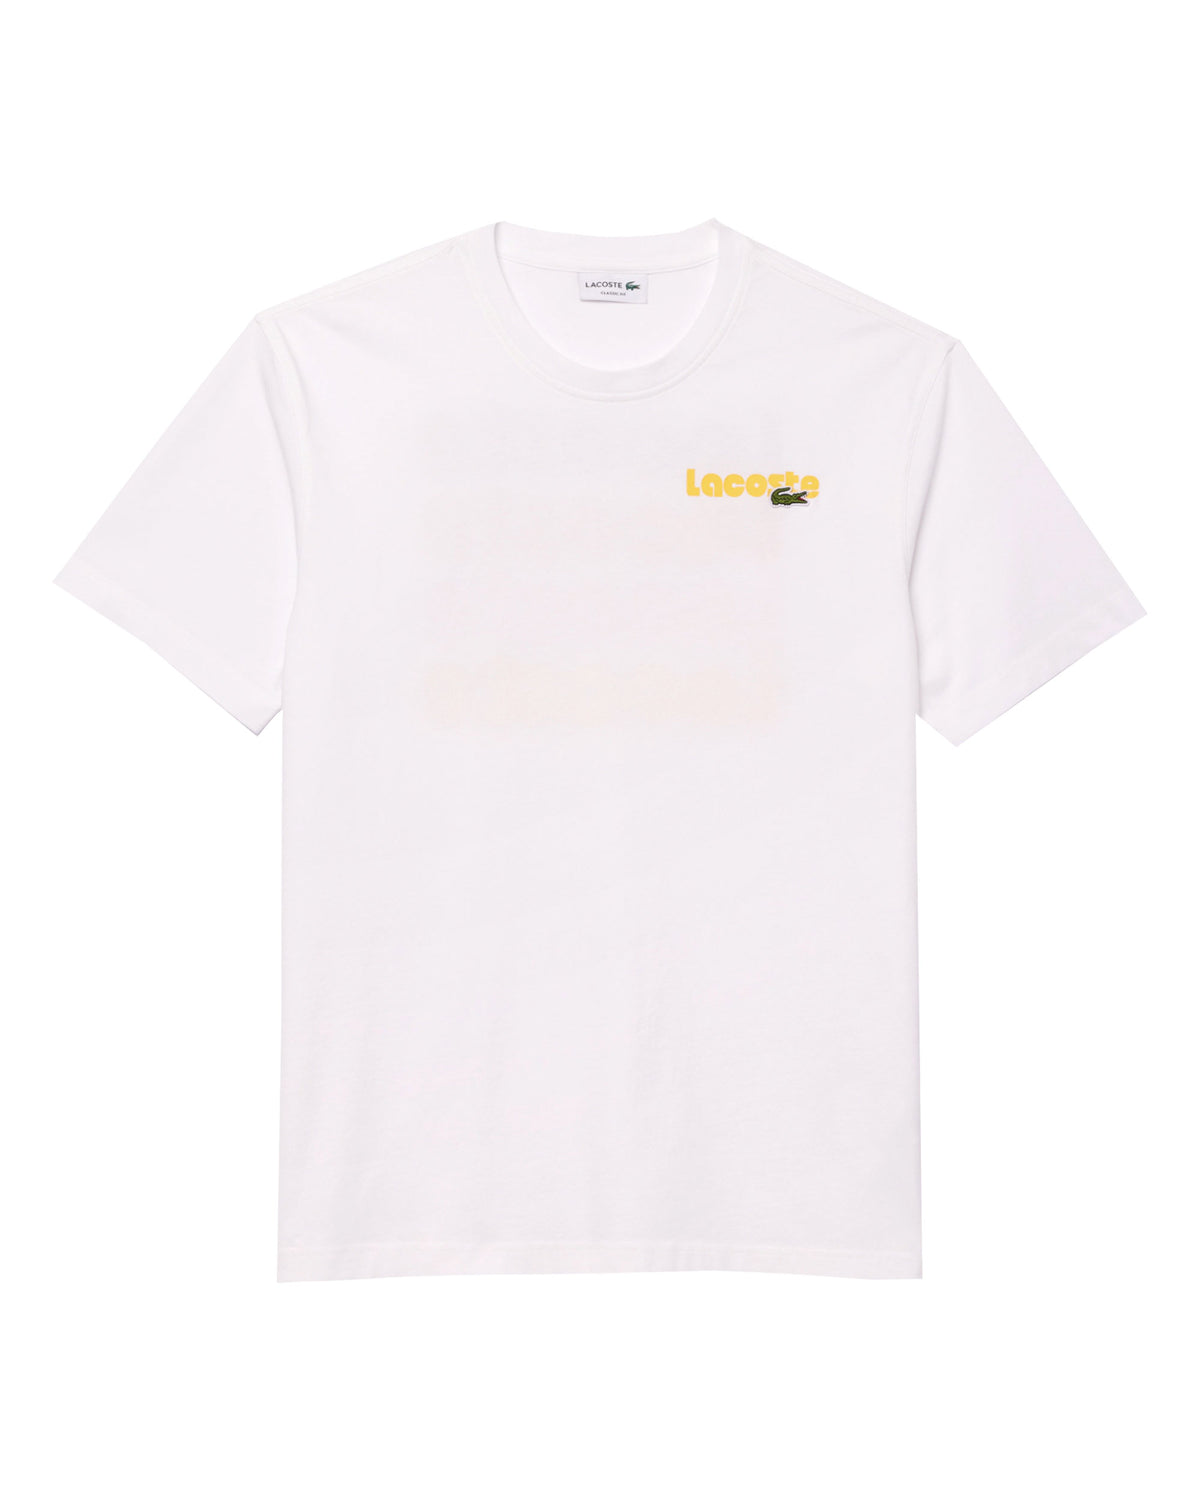 T-Shirt Uomo Lacoste Script Bianco